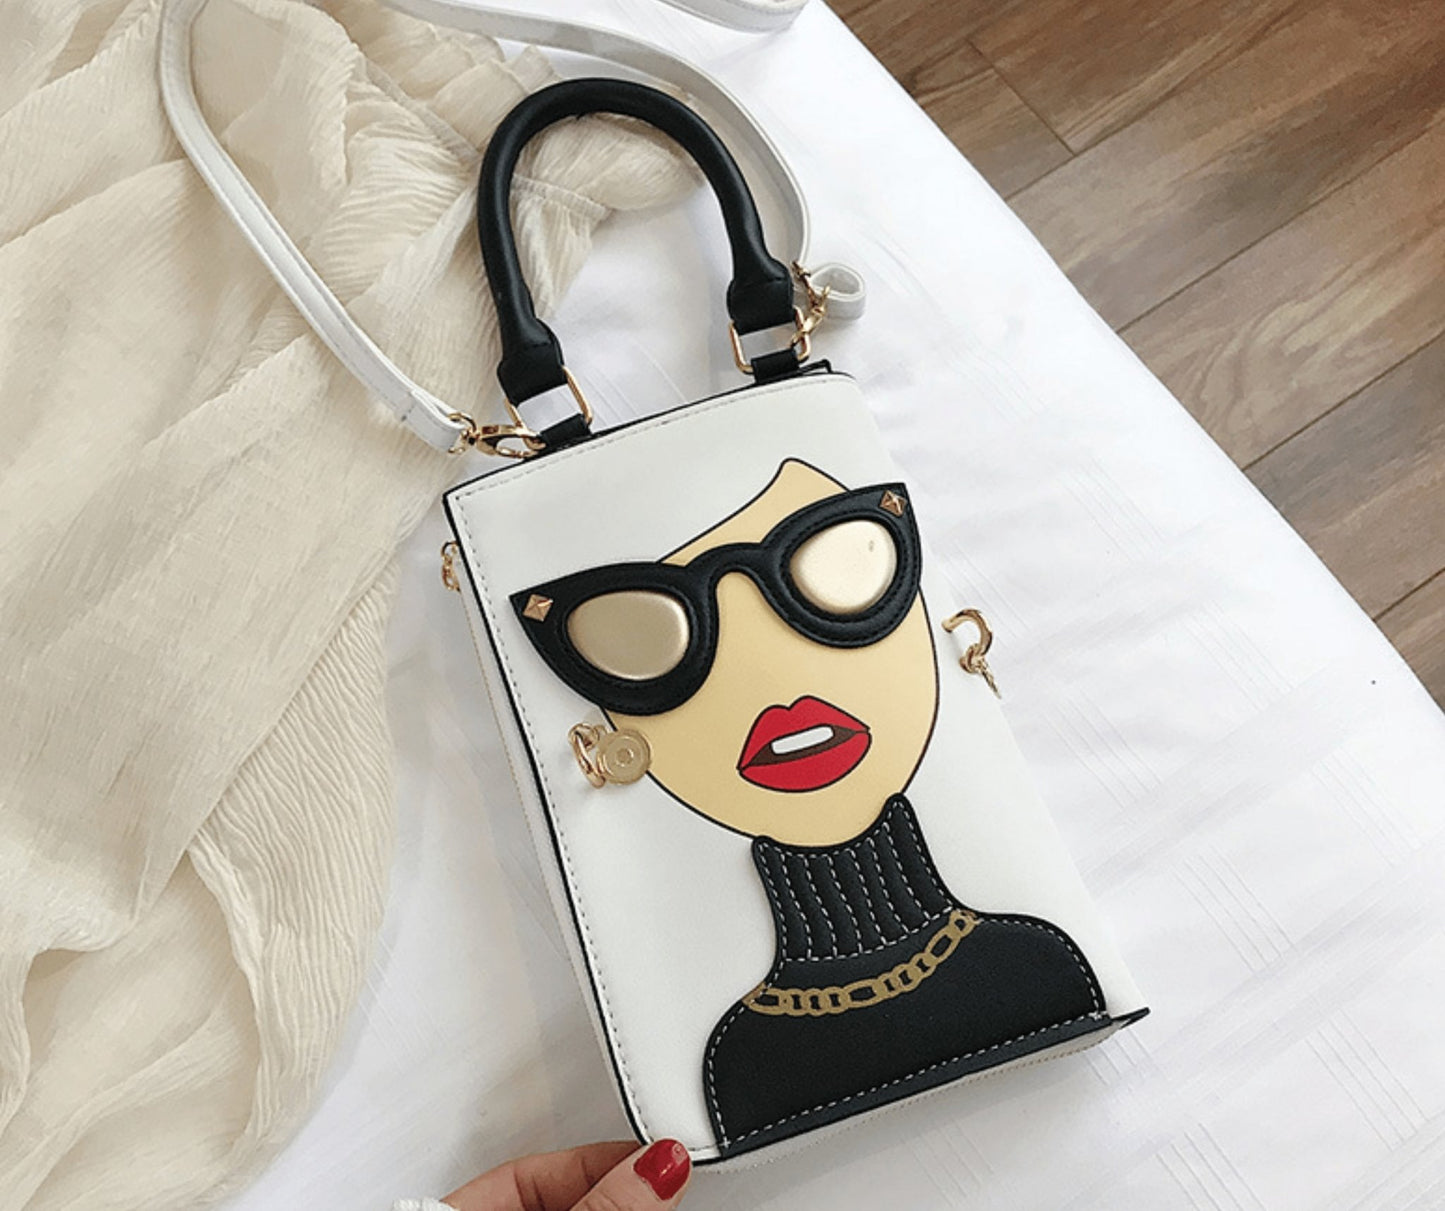 Trendy Lady Face Novelty Handbag - BloomBliss.com